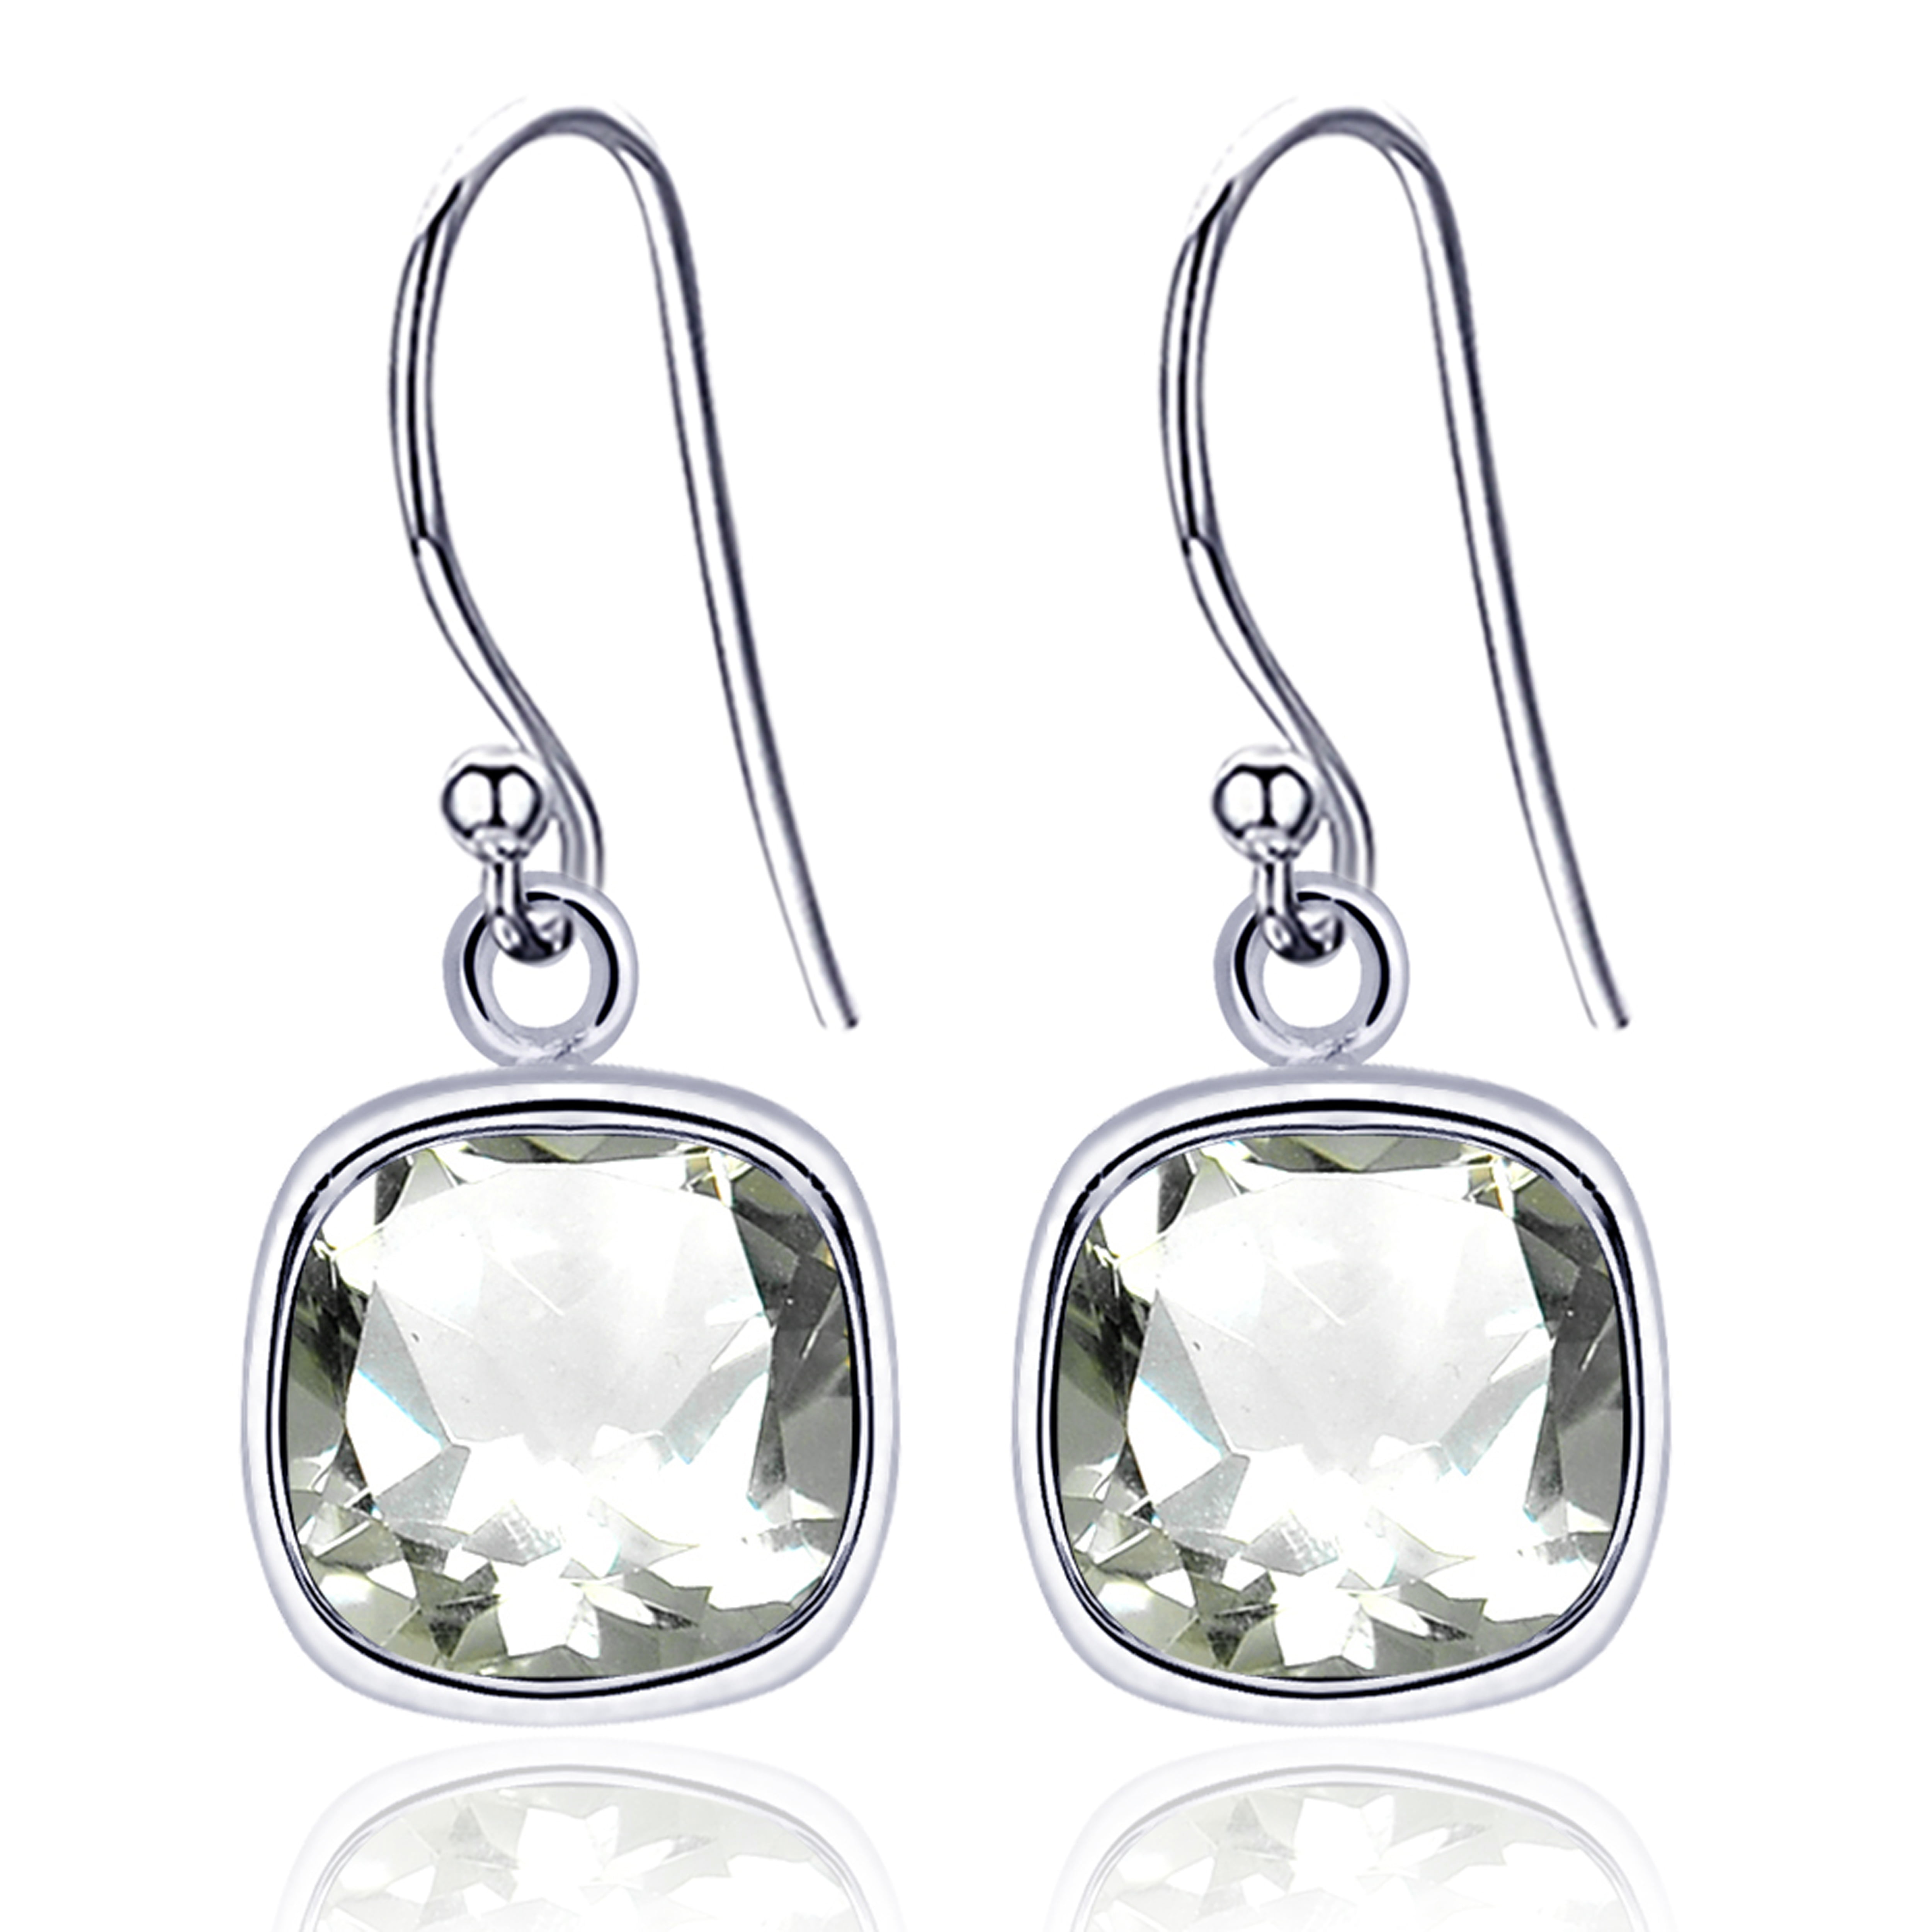 Details about   Gemstone Earrings 925 Sterling Silver Stud Earring Her,Anniversary Gift Earring